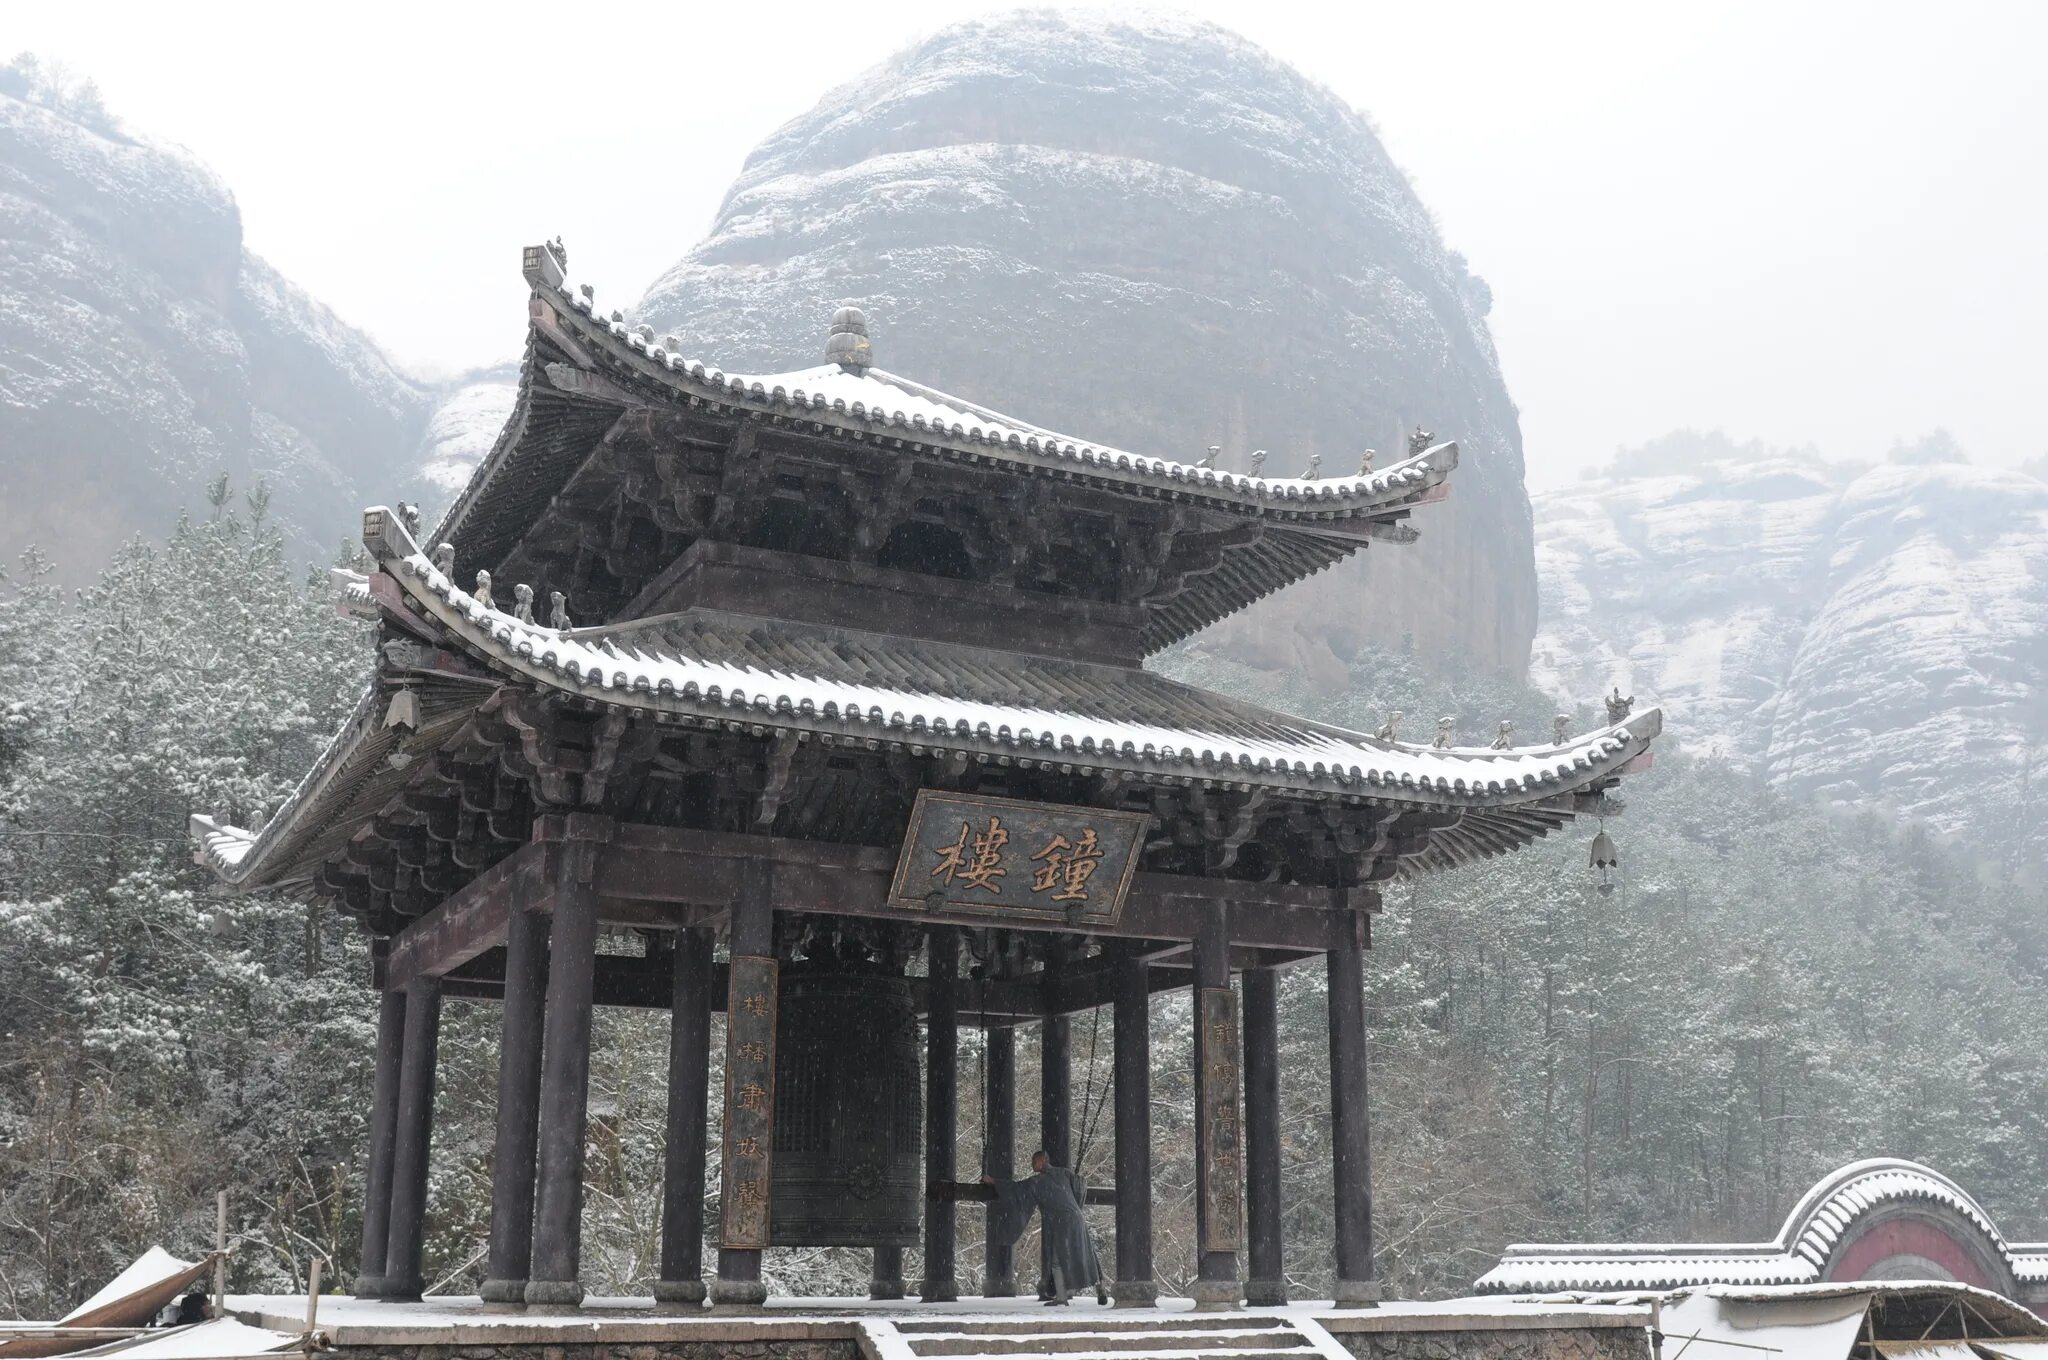 Shaolin temple. Буддийский храм Шаолинь. Монастырь Шаолинь. Шаолинь Хэнань. Шаолиньский монастырь в Китае.